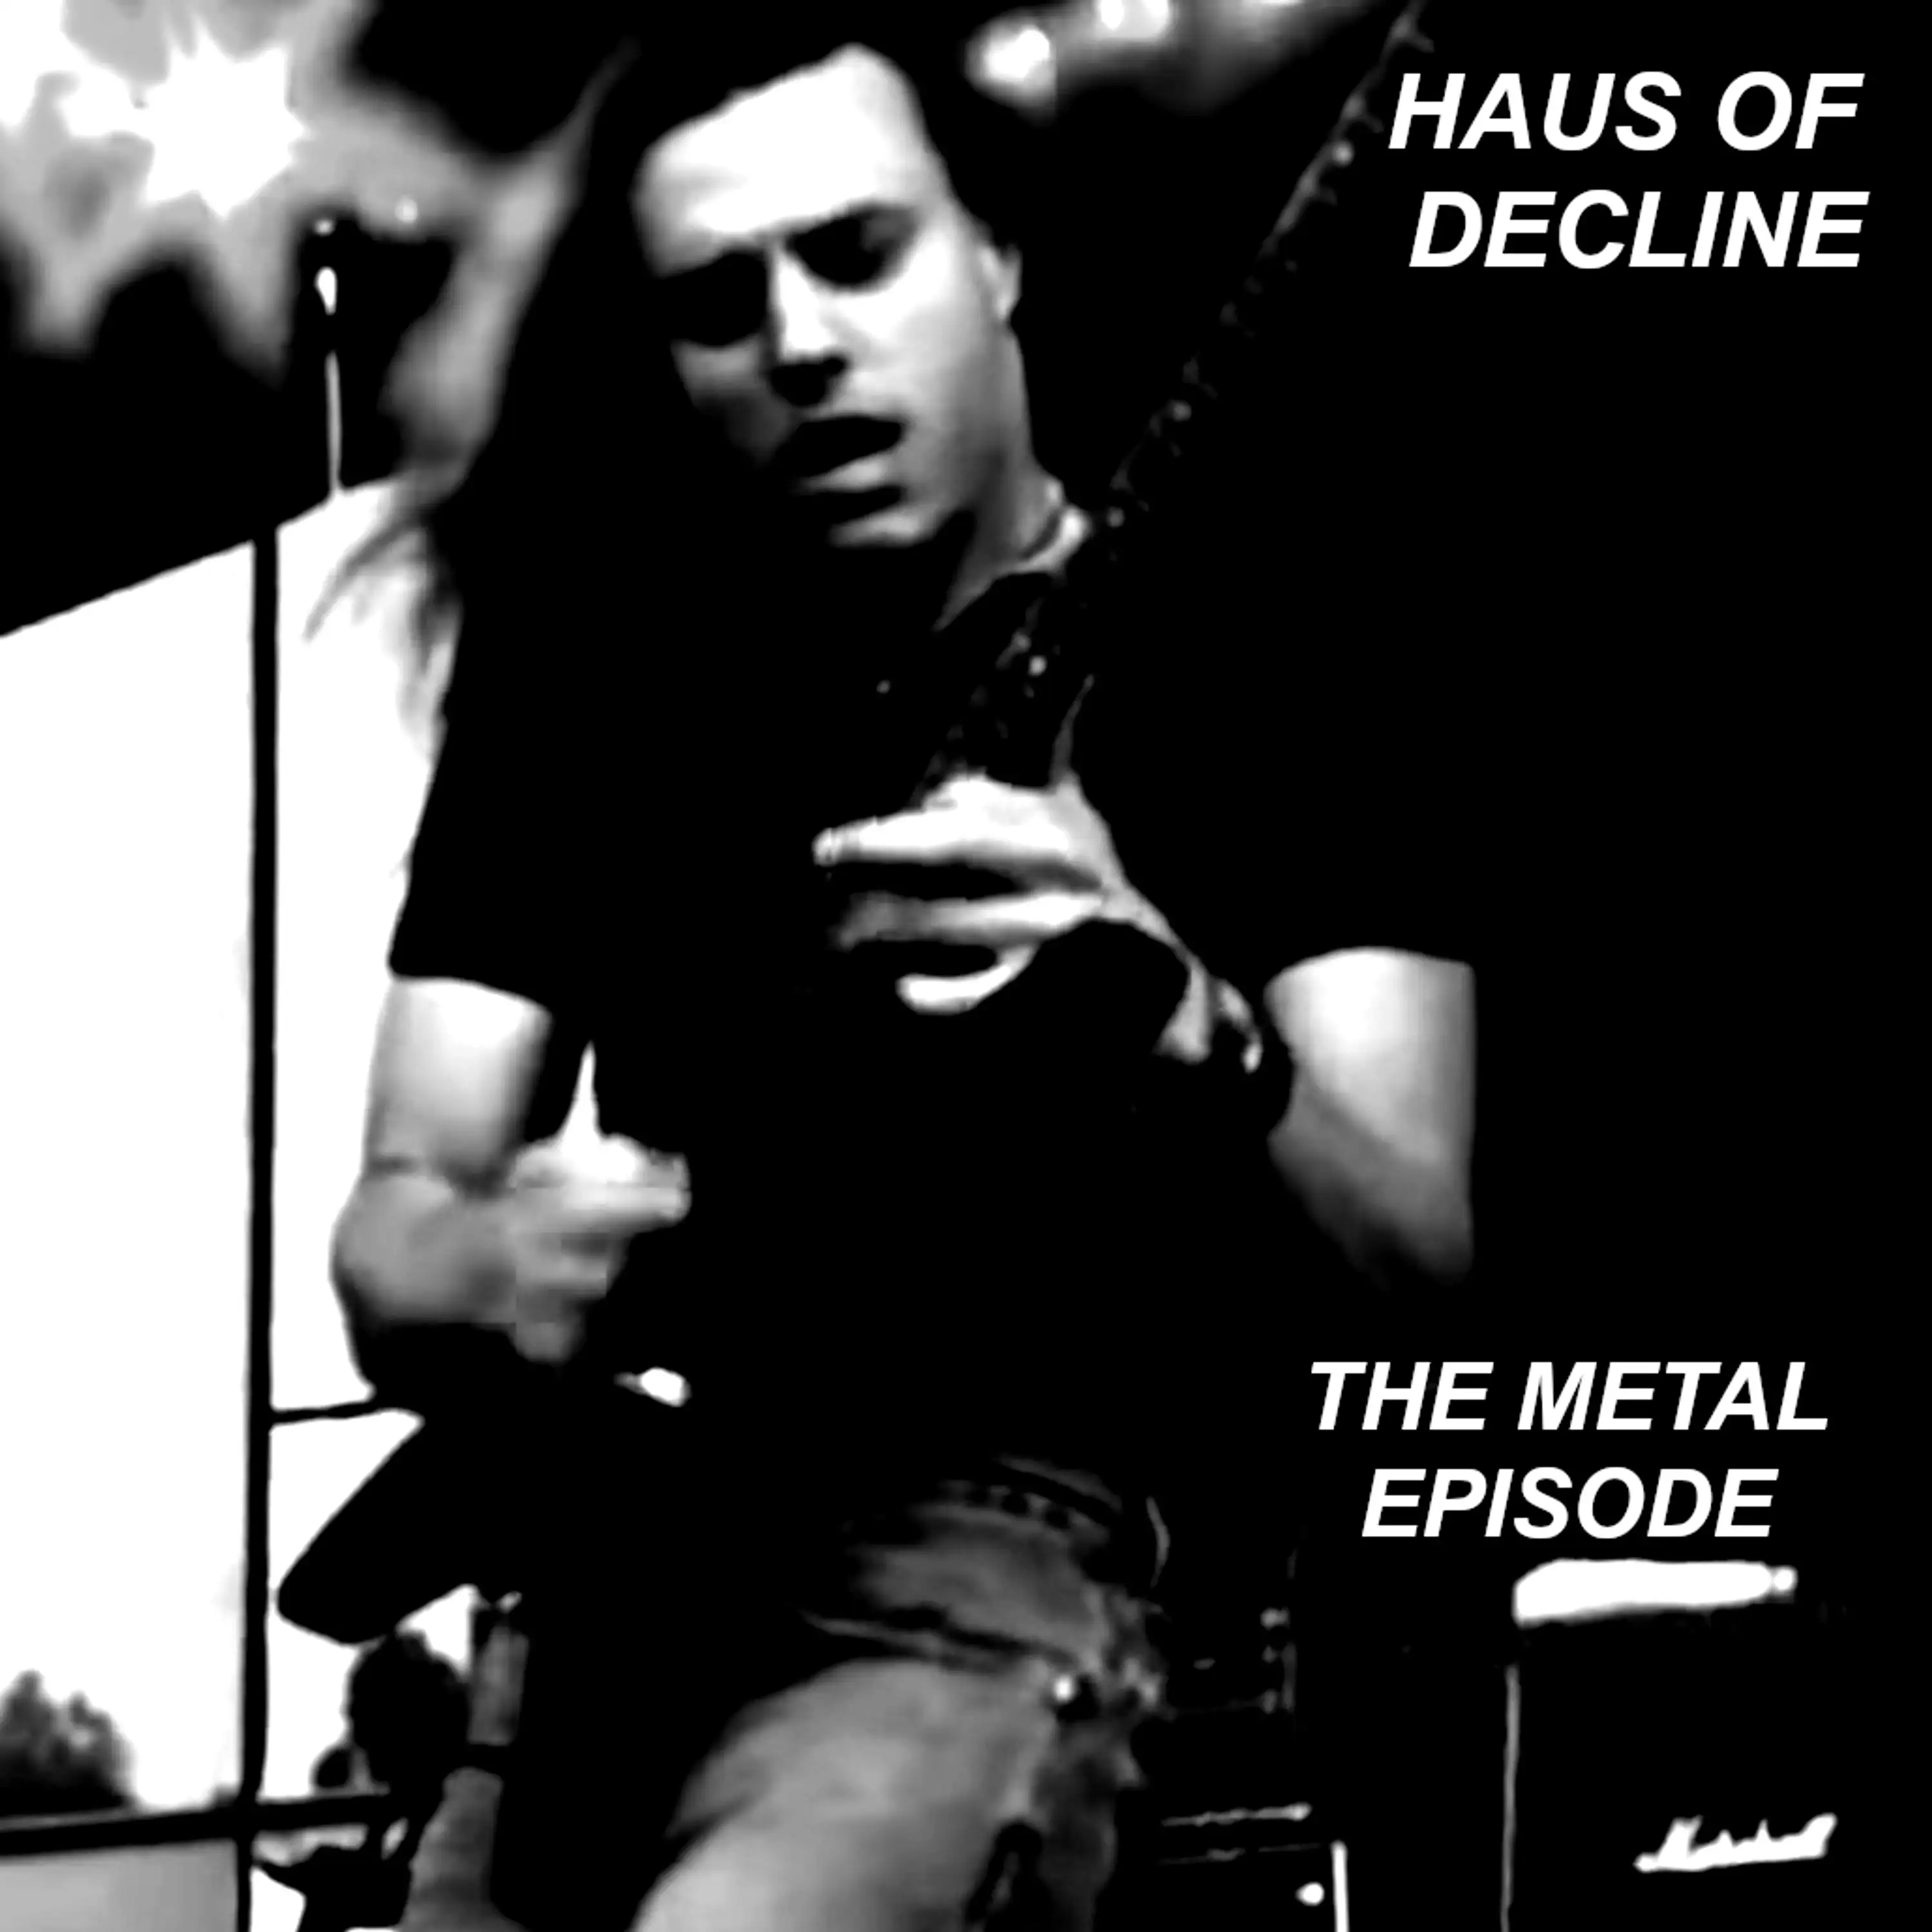 The Metal Episode